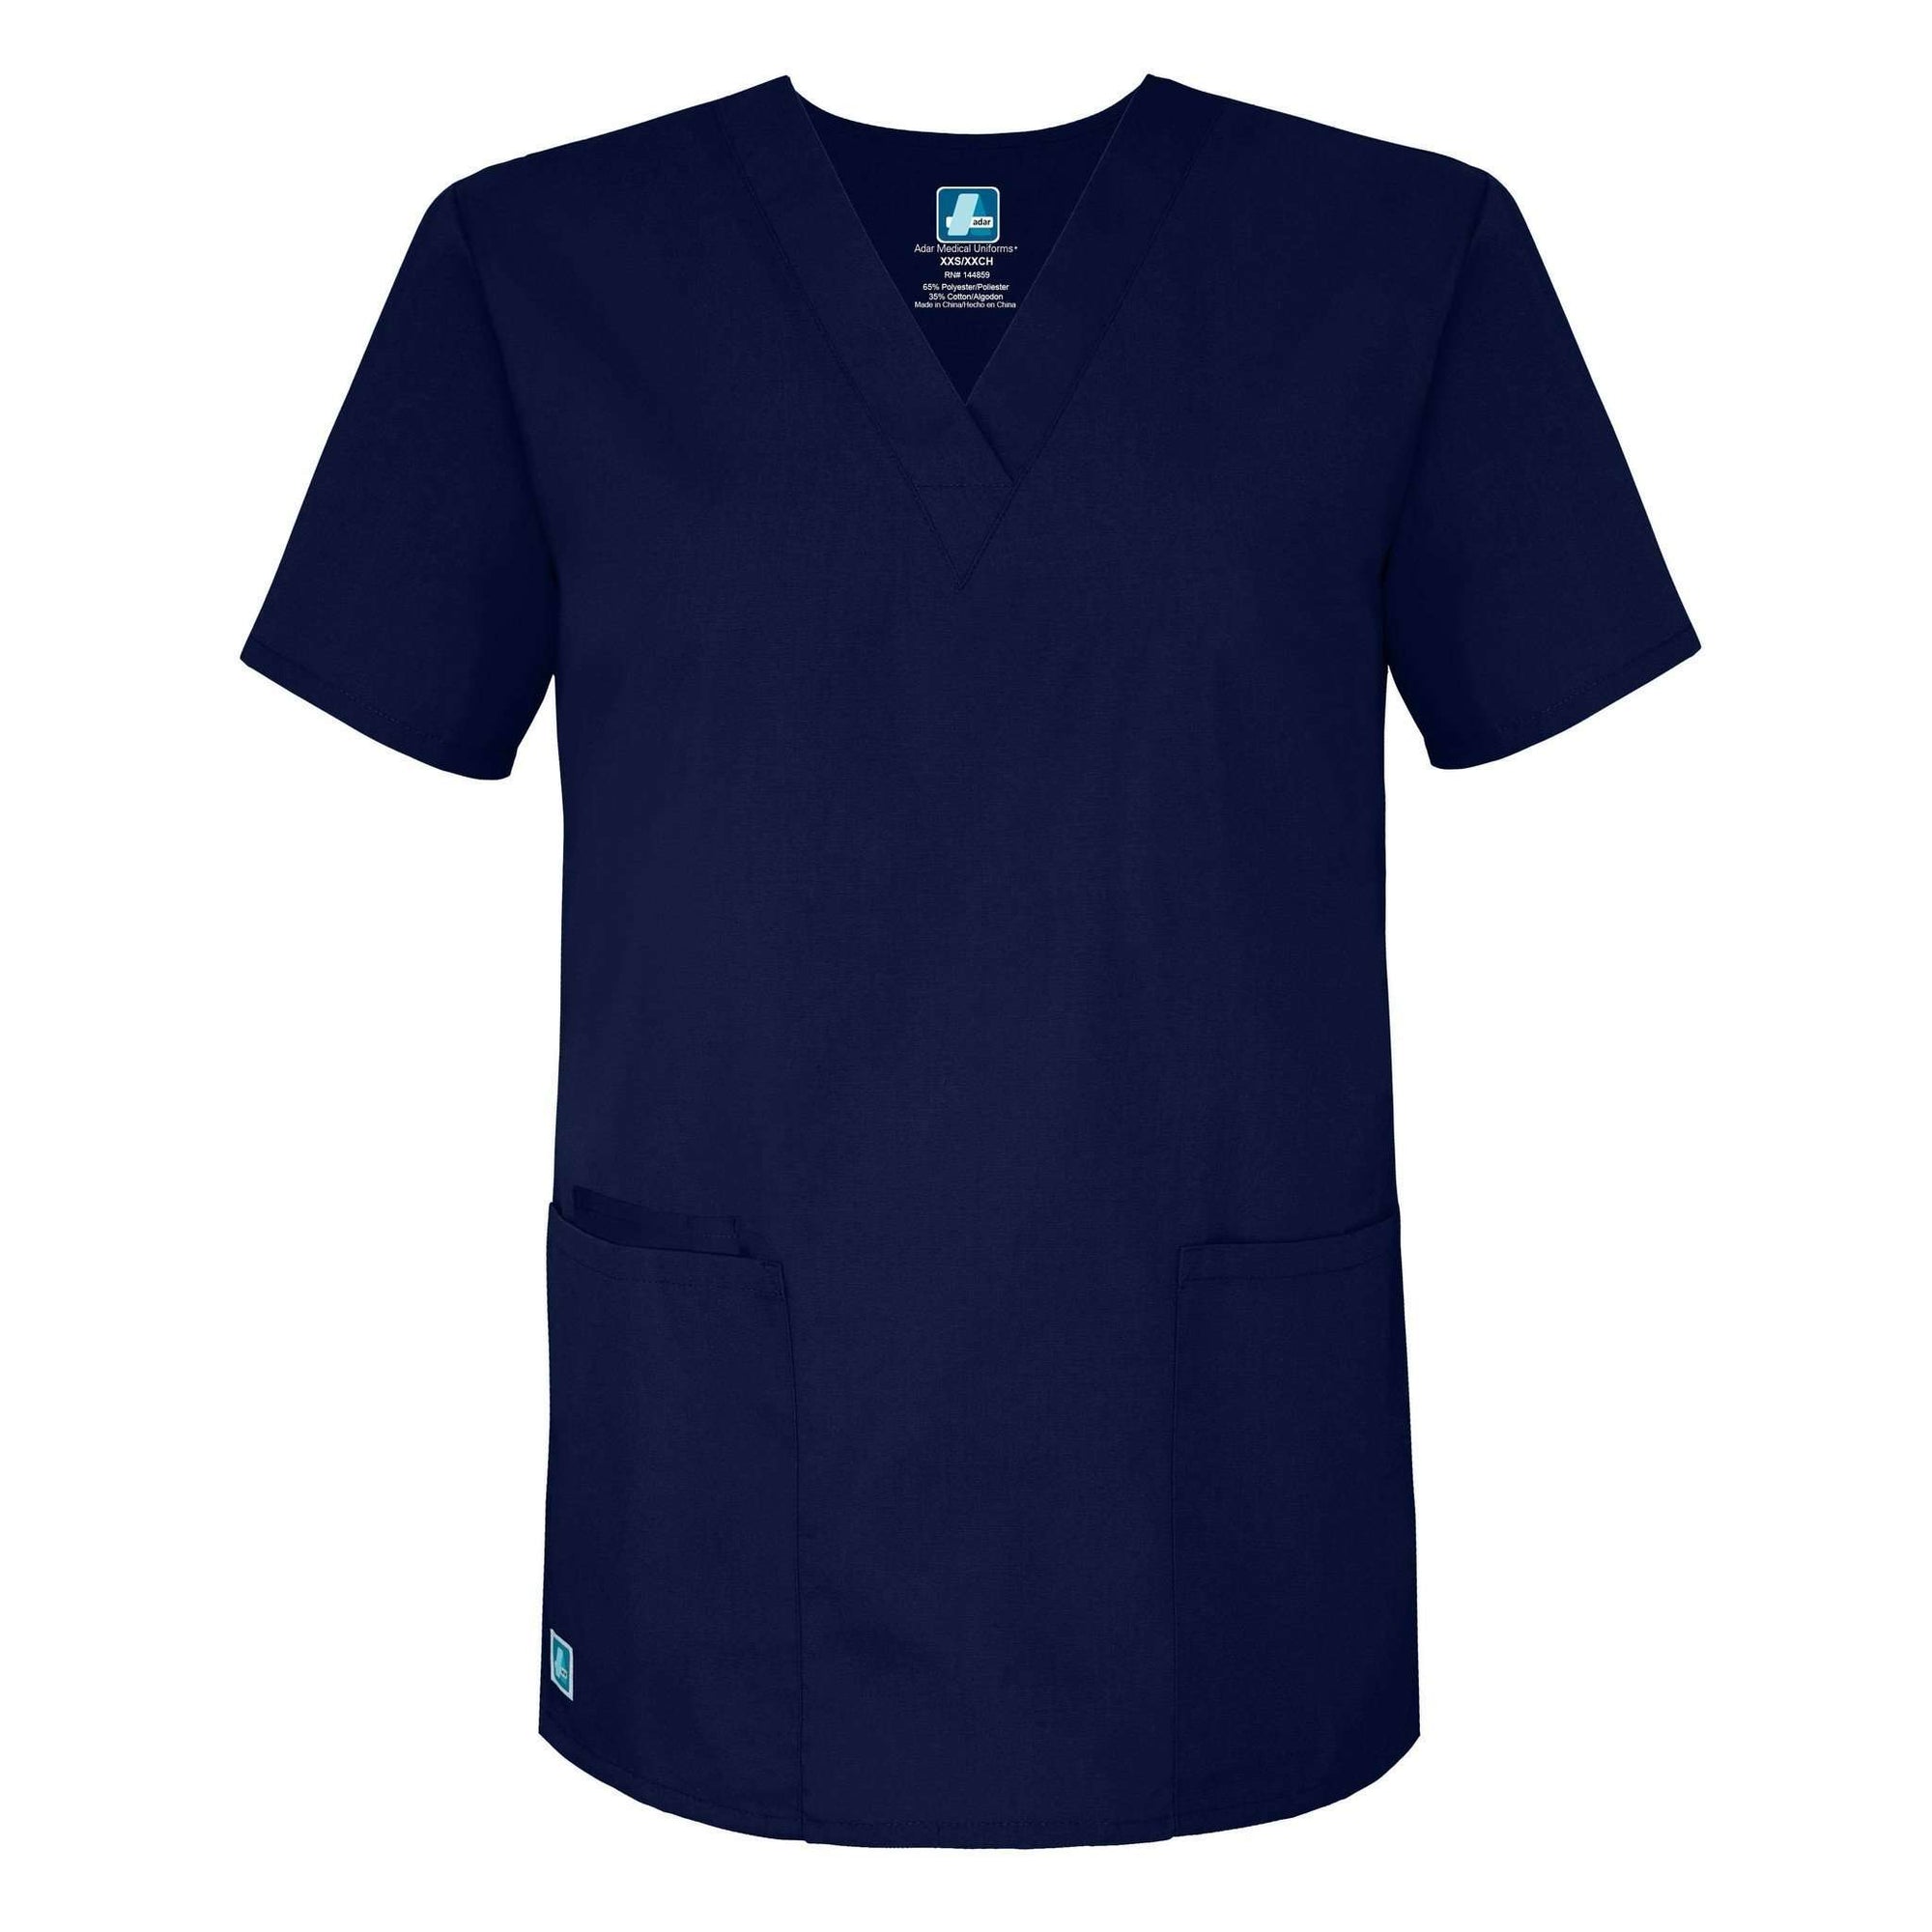  Adar - uniforms Medical Uniform Tops uniforms online Adar Universal Unisex V-Neck 2 Pocket Scrub Top Navy M - SchoolUniforms.com